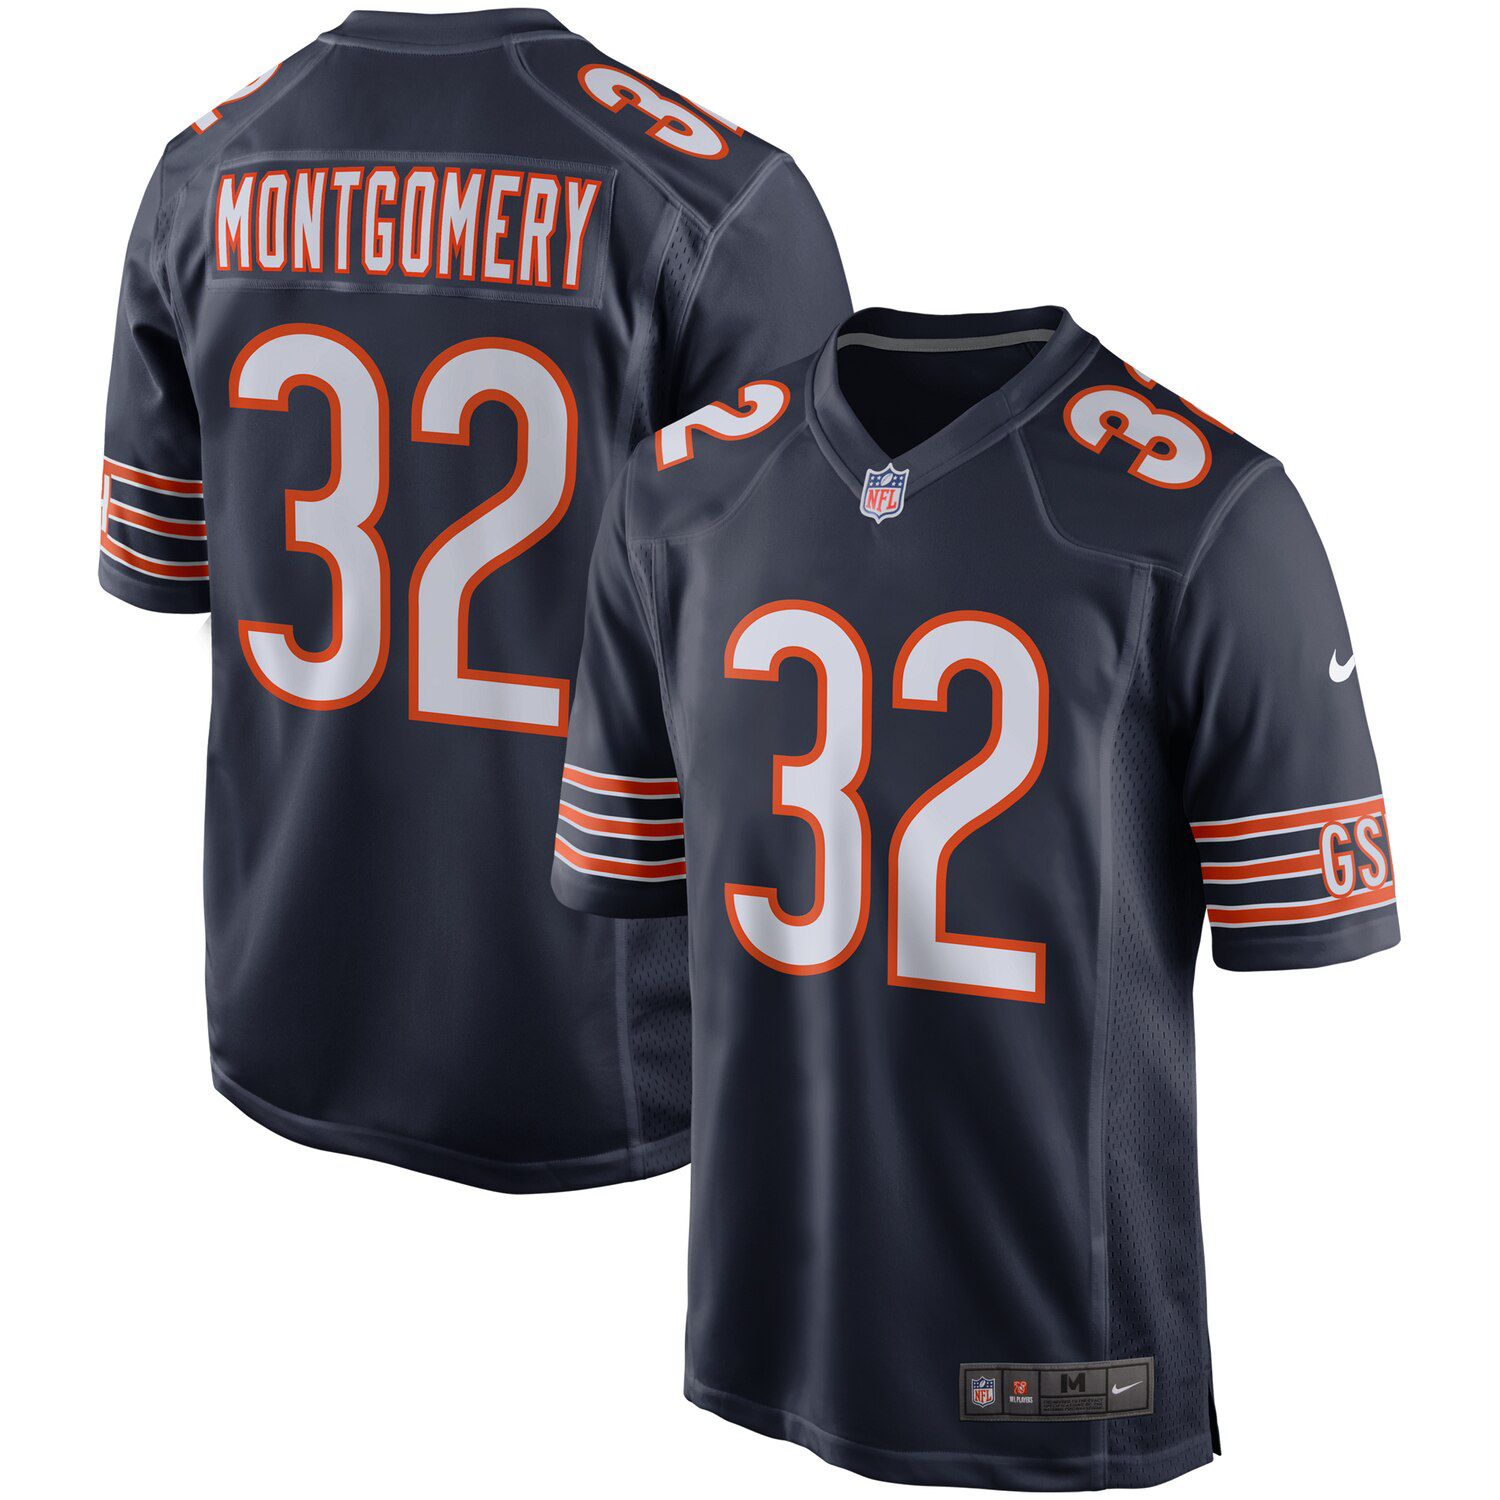 bears montgomery jersey